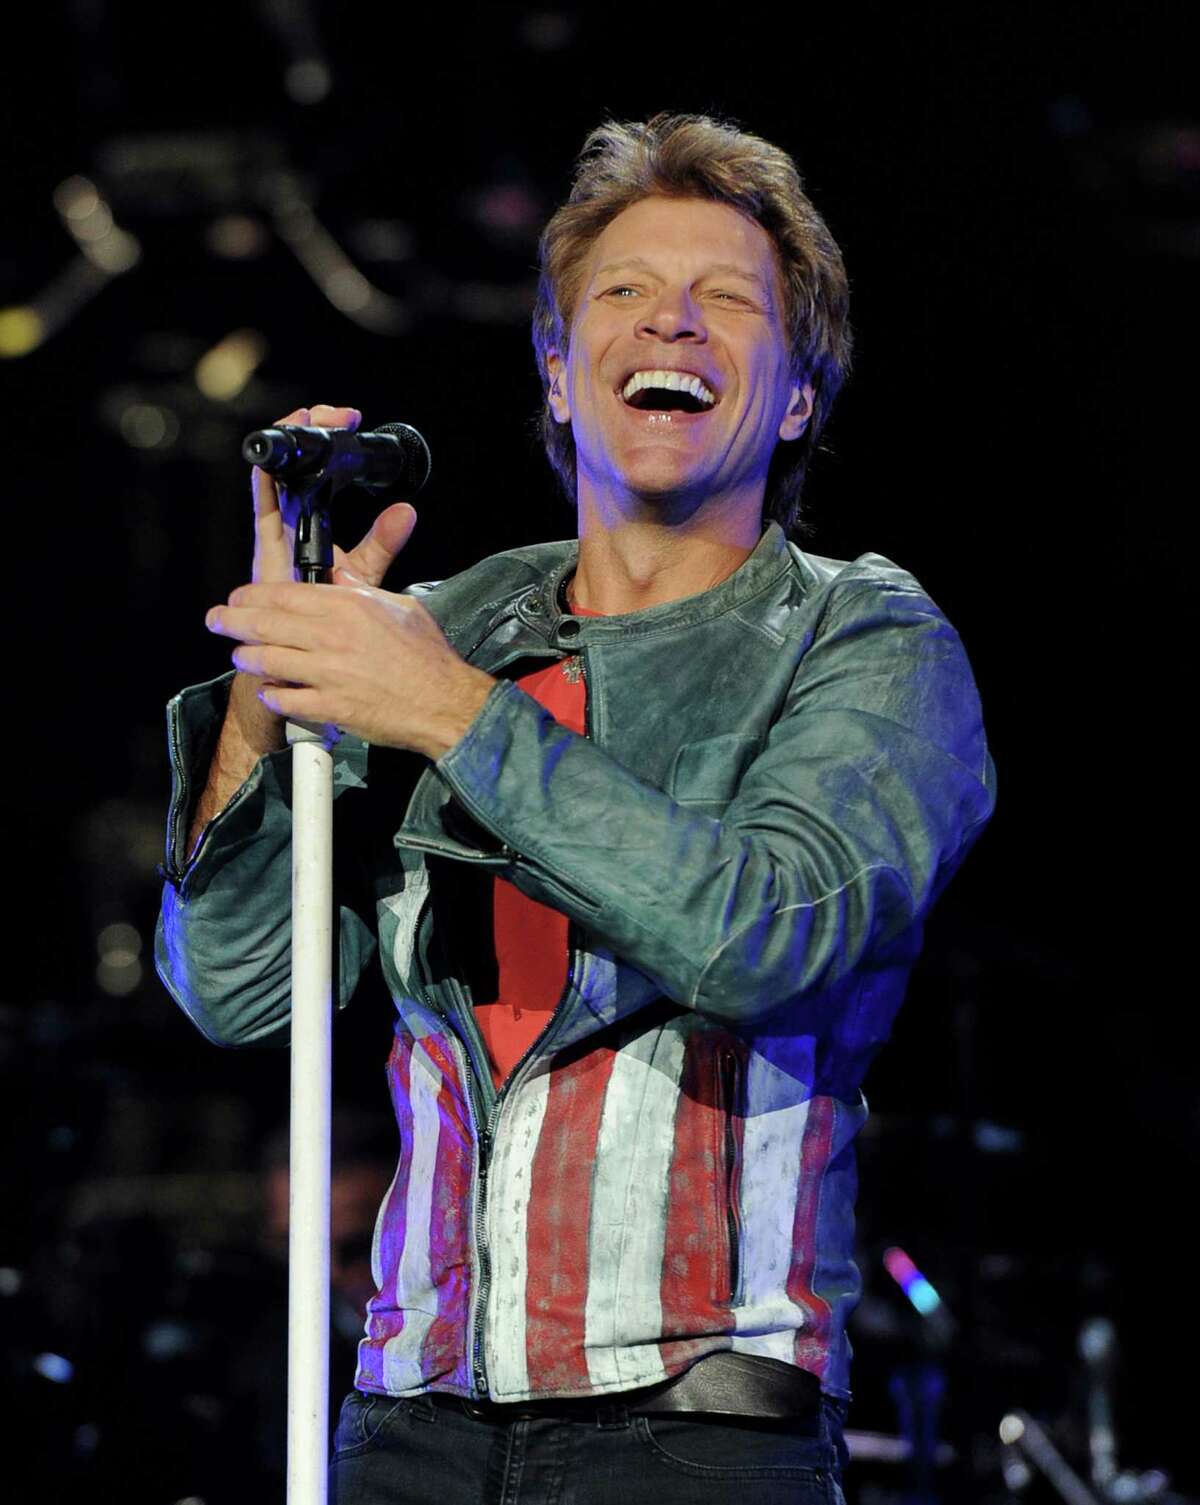 Musician Jon Bon Jovi performs at The Staples Center on October 11, 2013 in Los Angeles, California.